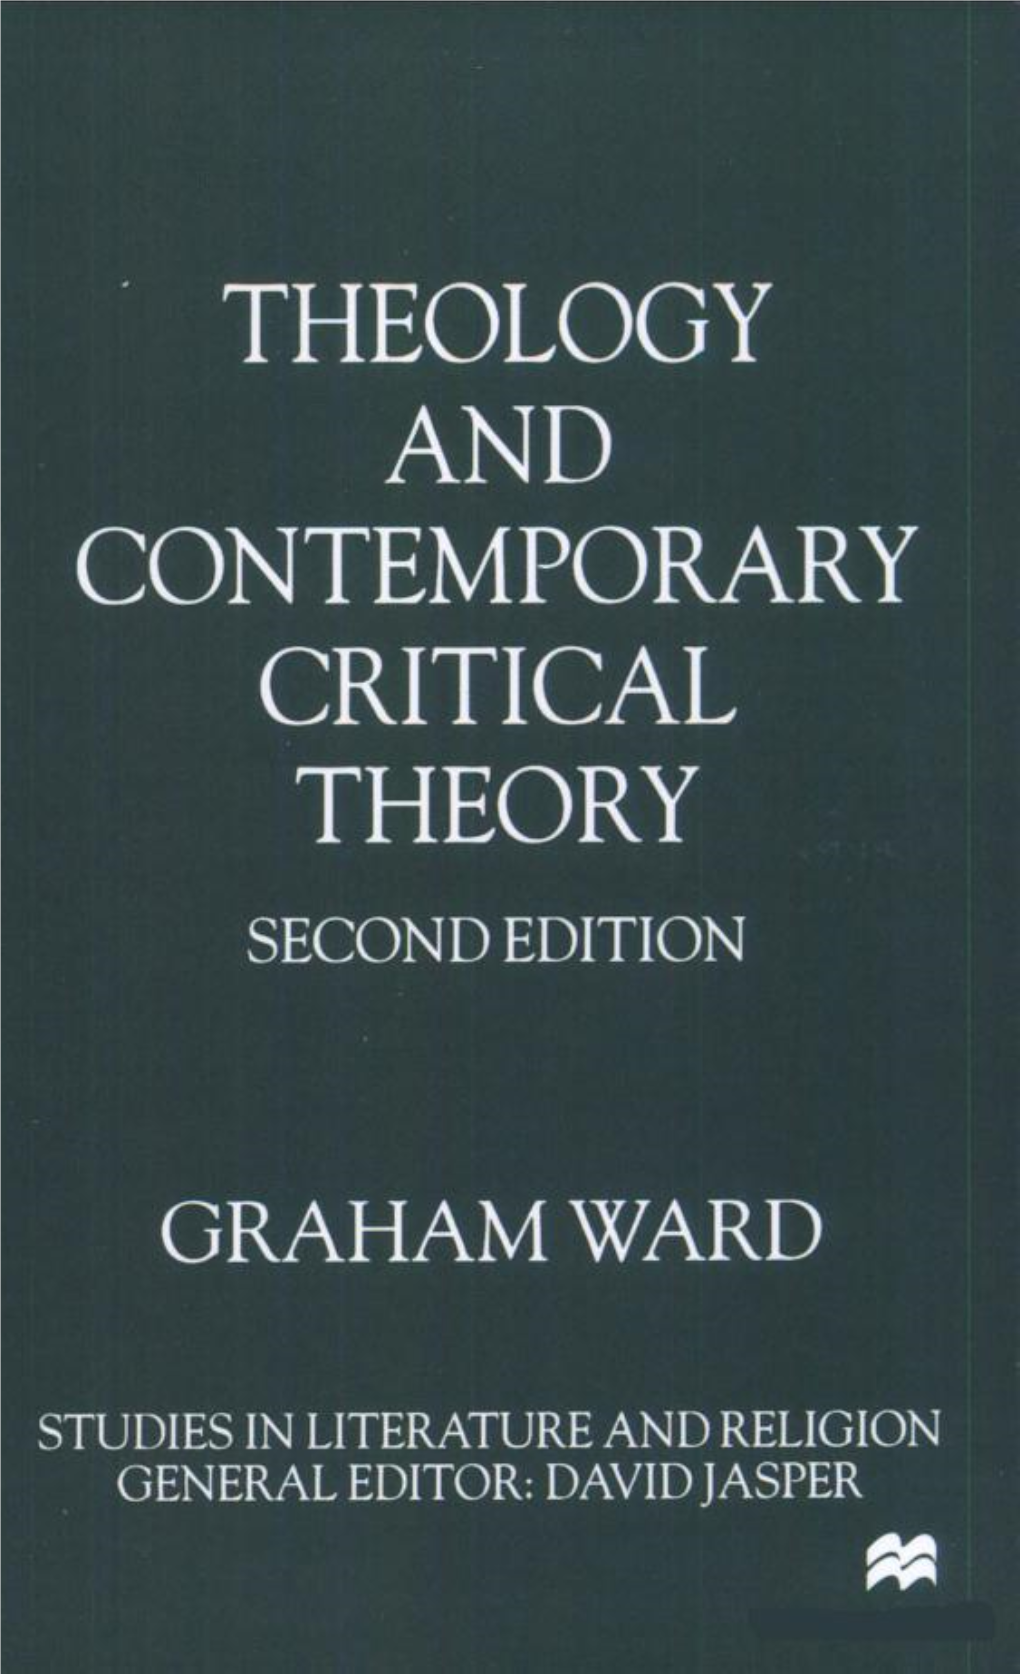 Theology and Contemporary Critical Theory, Graham Ward 02PR1850 V-Vi 30/9/99 10:23 Page V